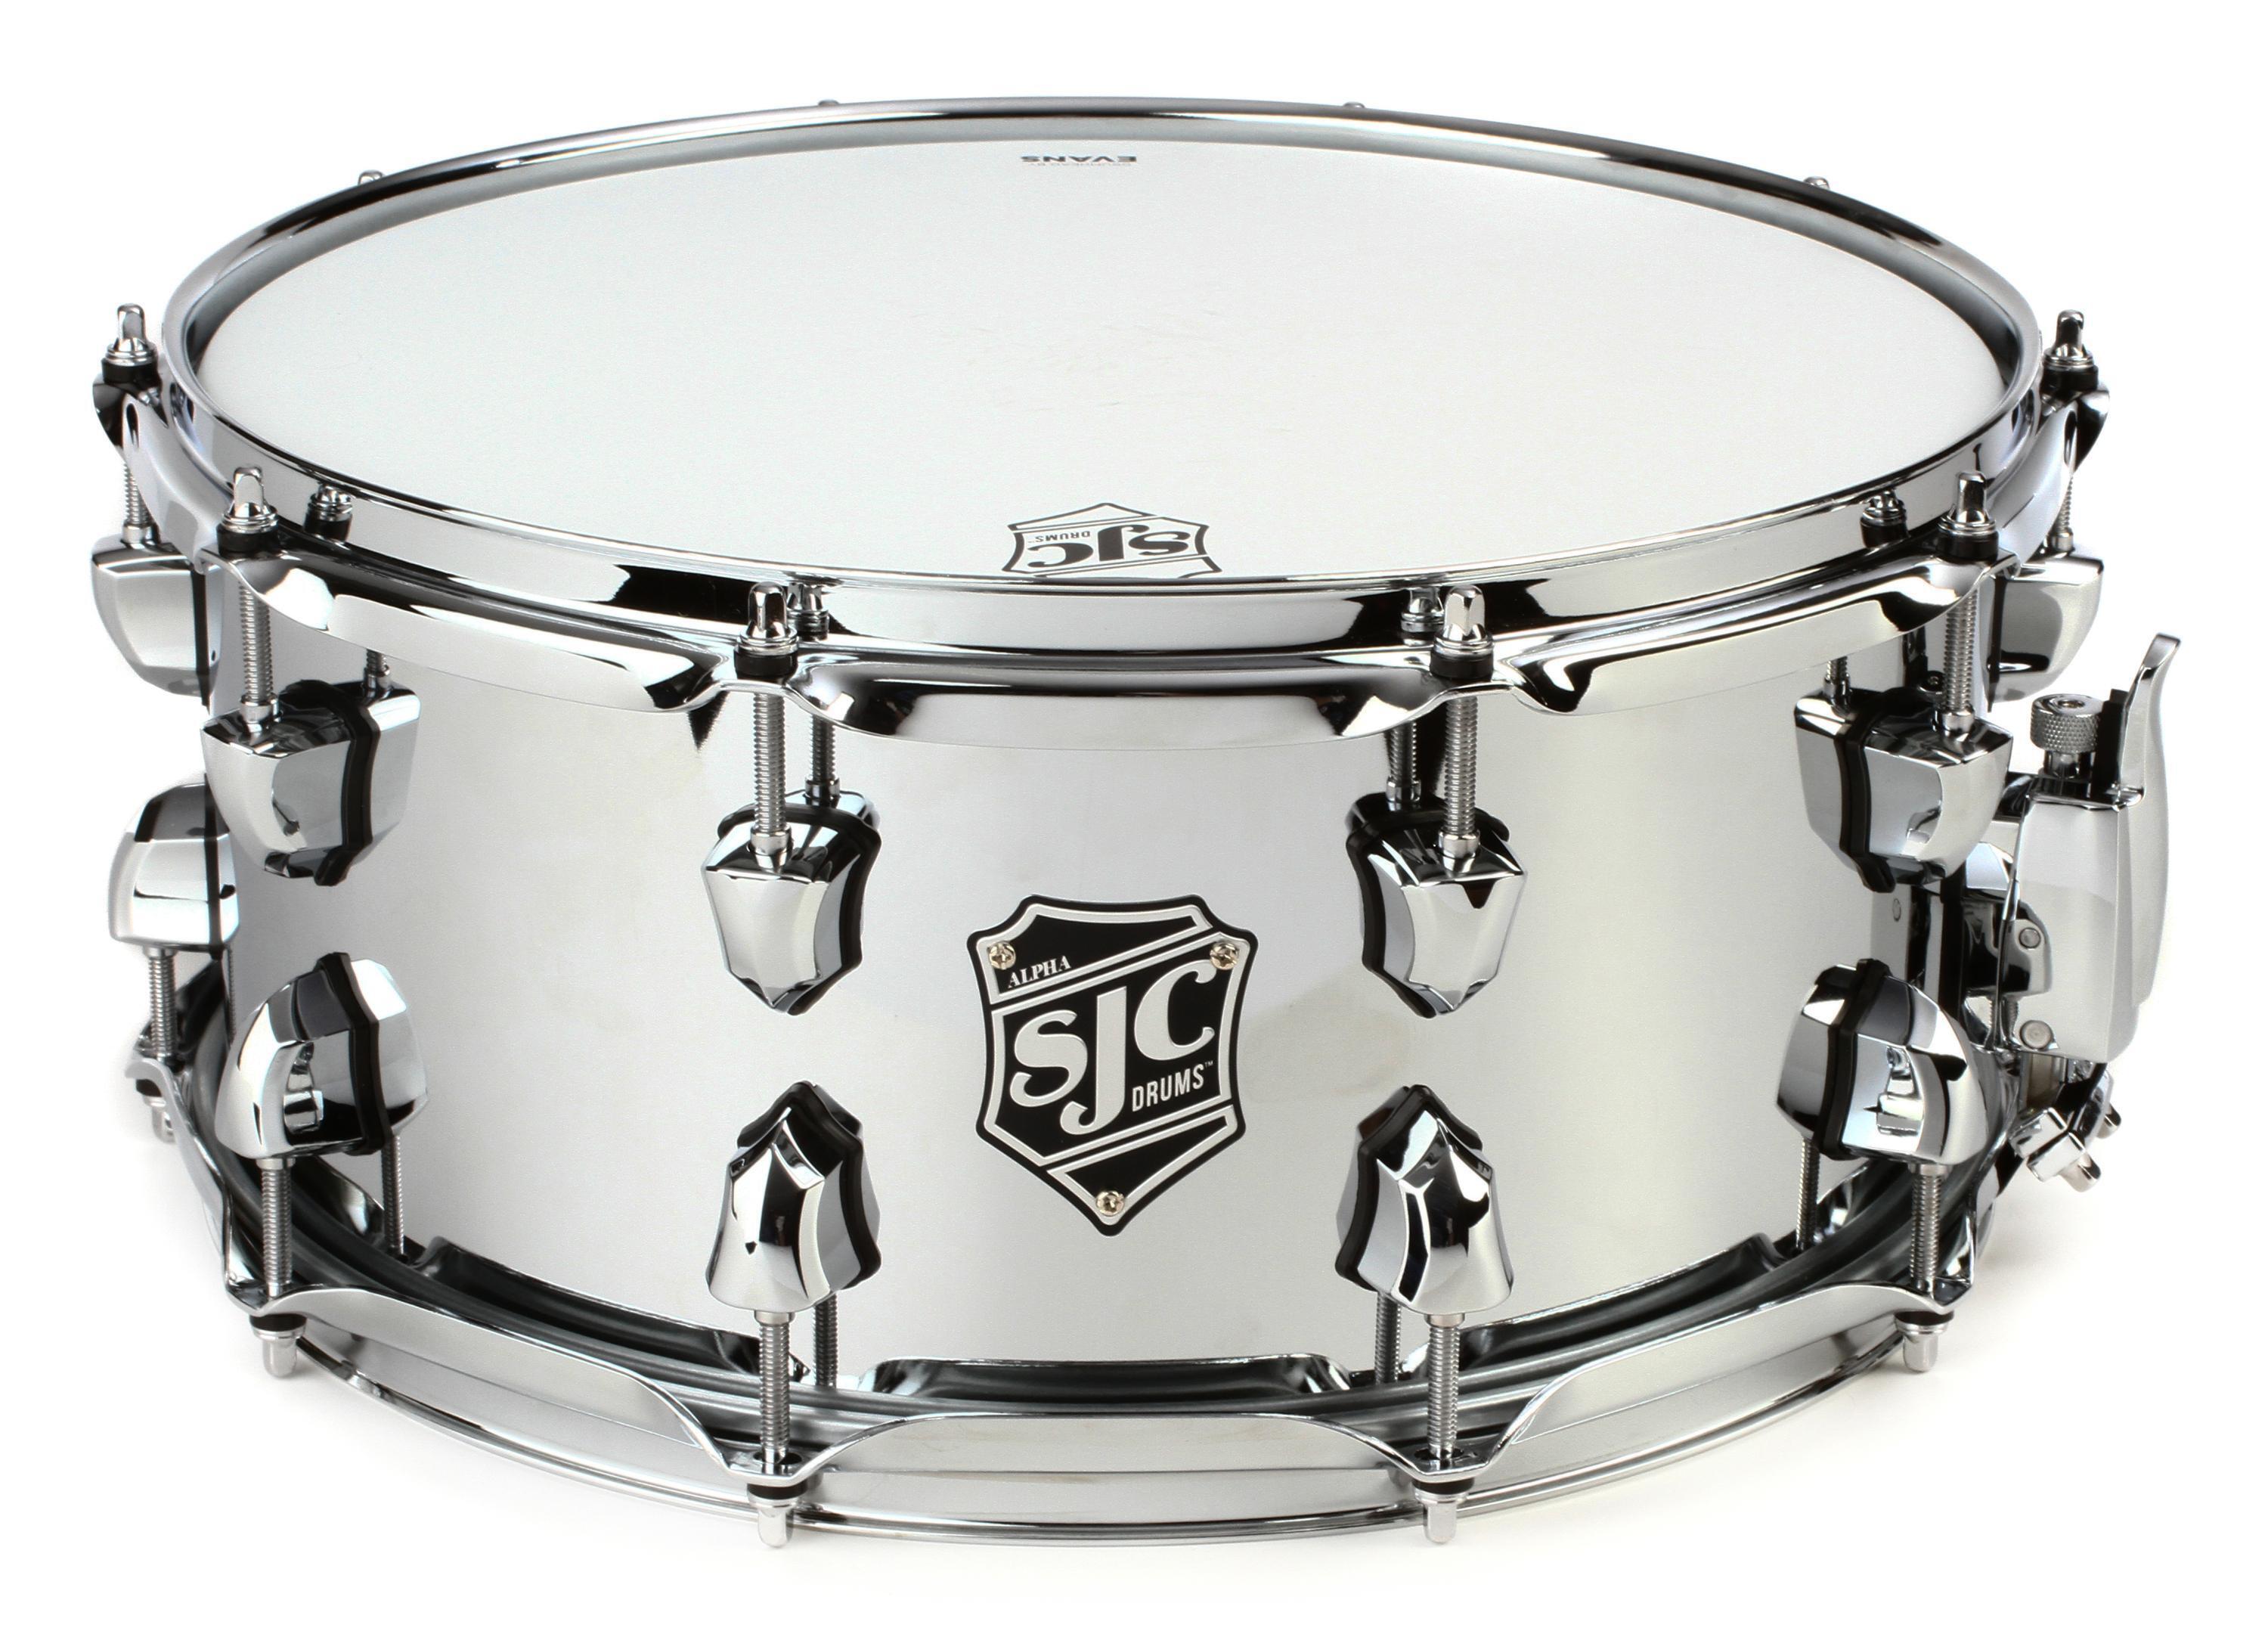 SJC Custom Drums Alpha Steel Snare Drum - 6.5